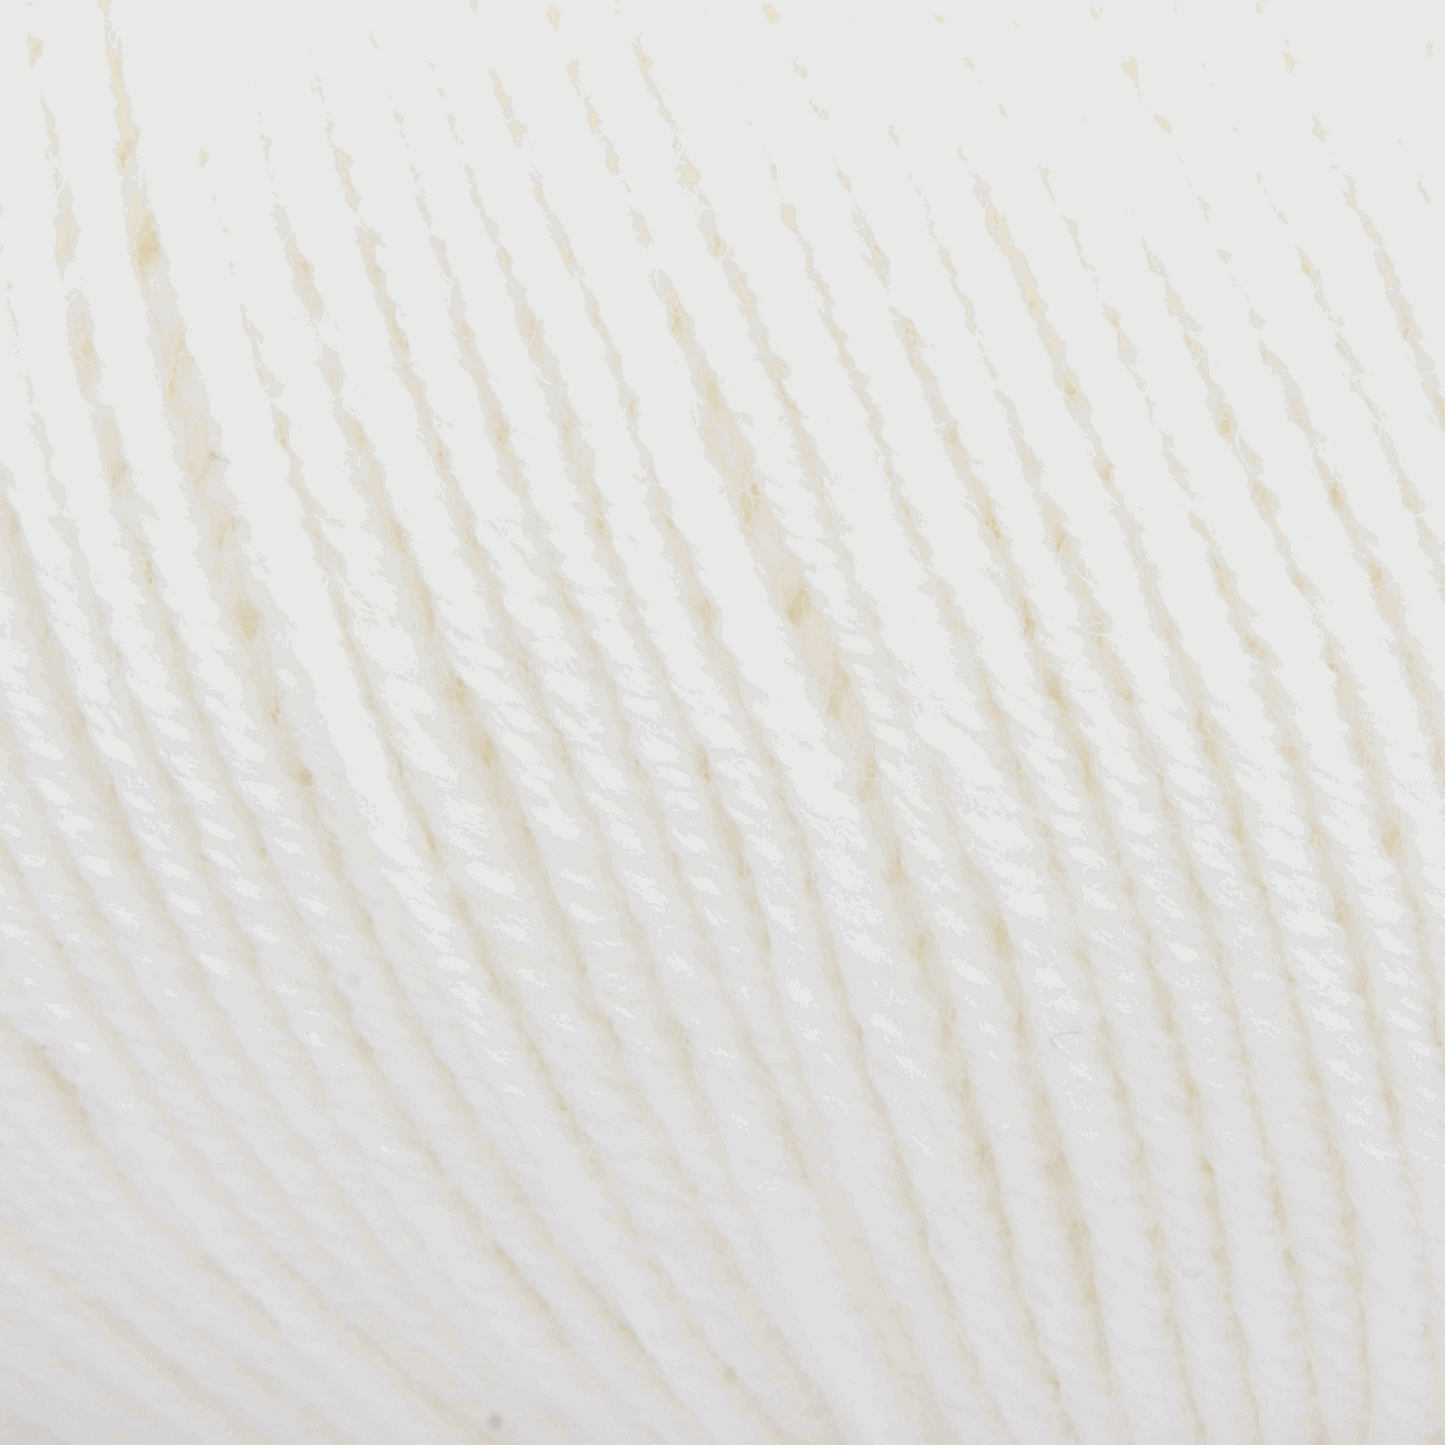 ggh Merino Soft, 50g, 96035, Farbe weiß 32